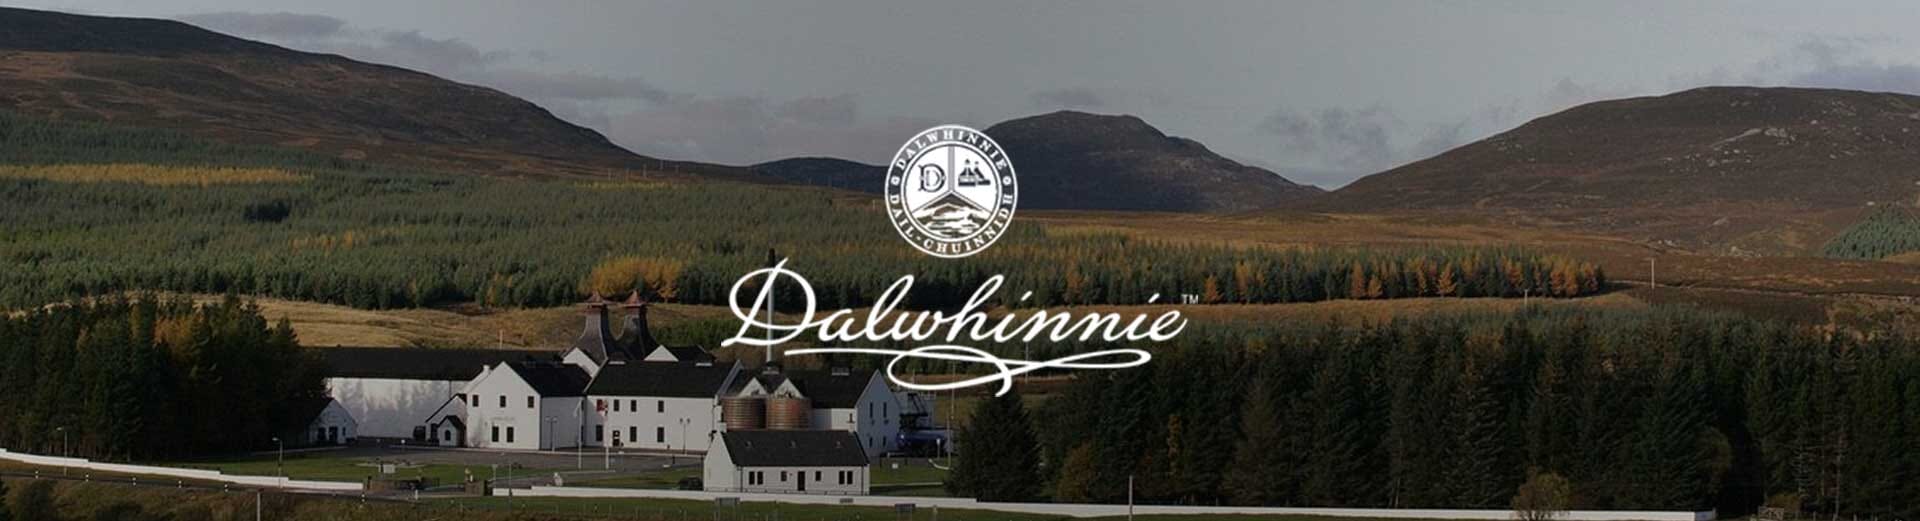 Dalwhinnie Distillery